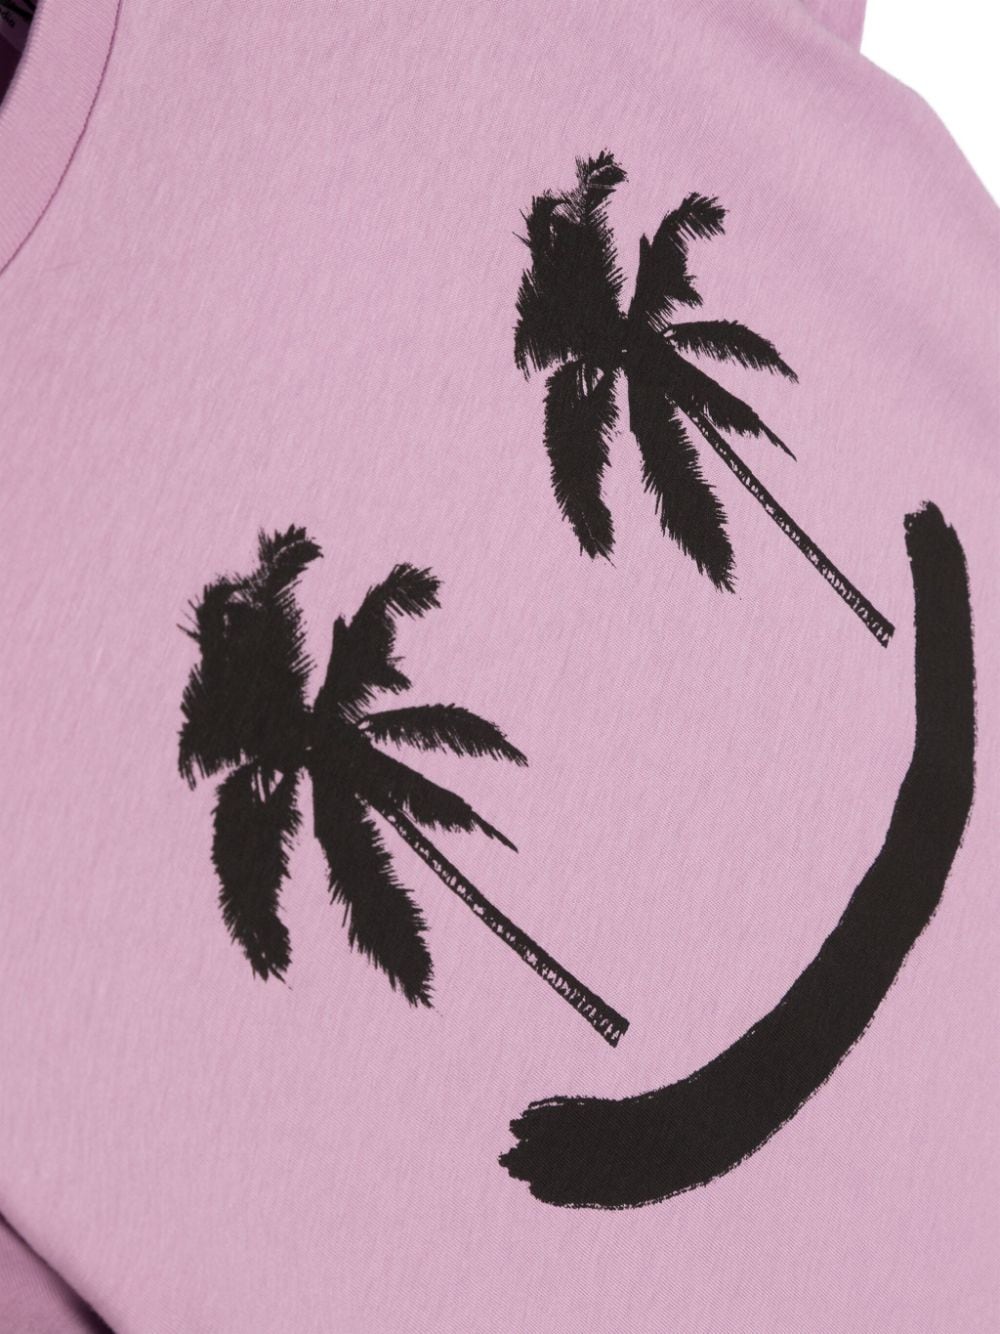 Molo T-shirt met palmboomprint Roze